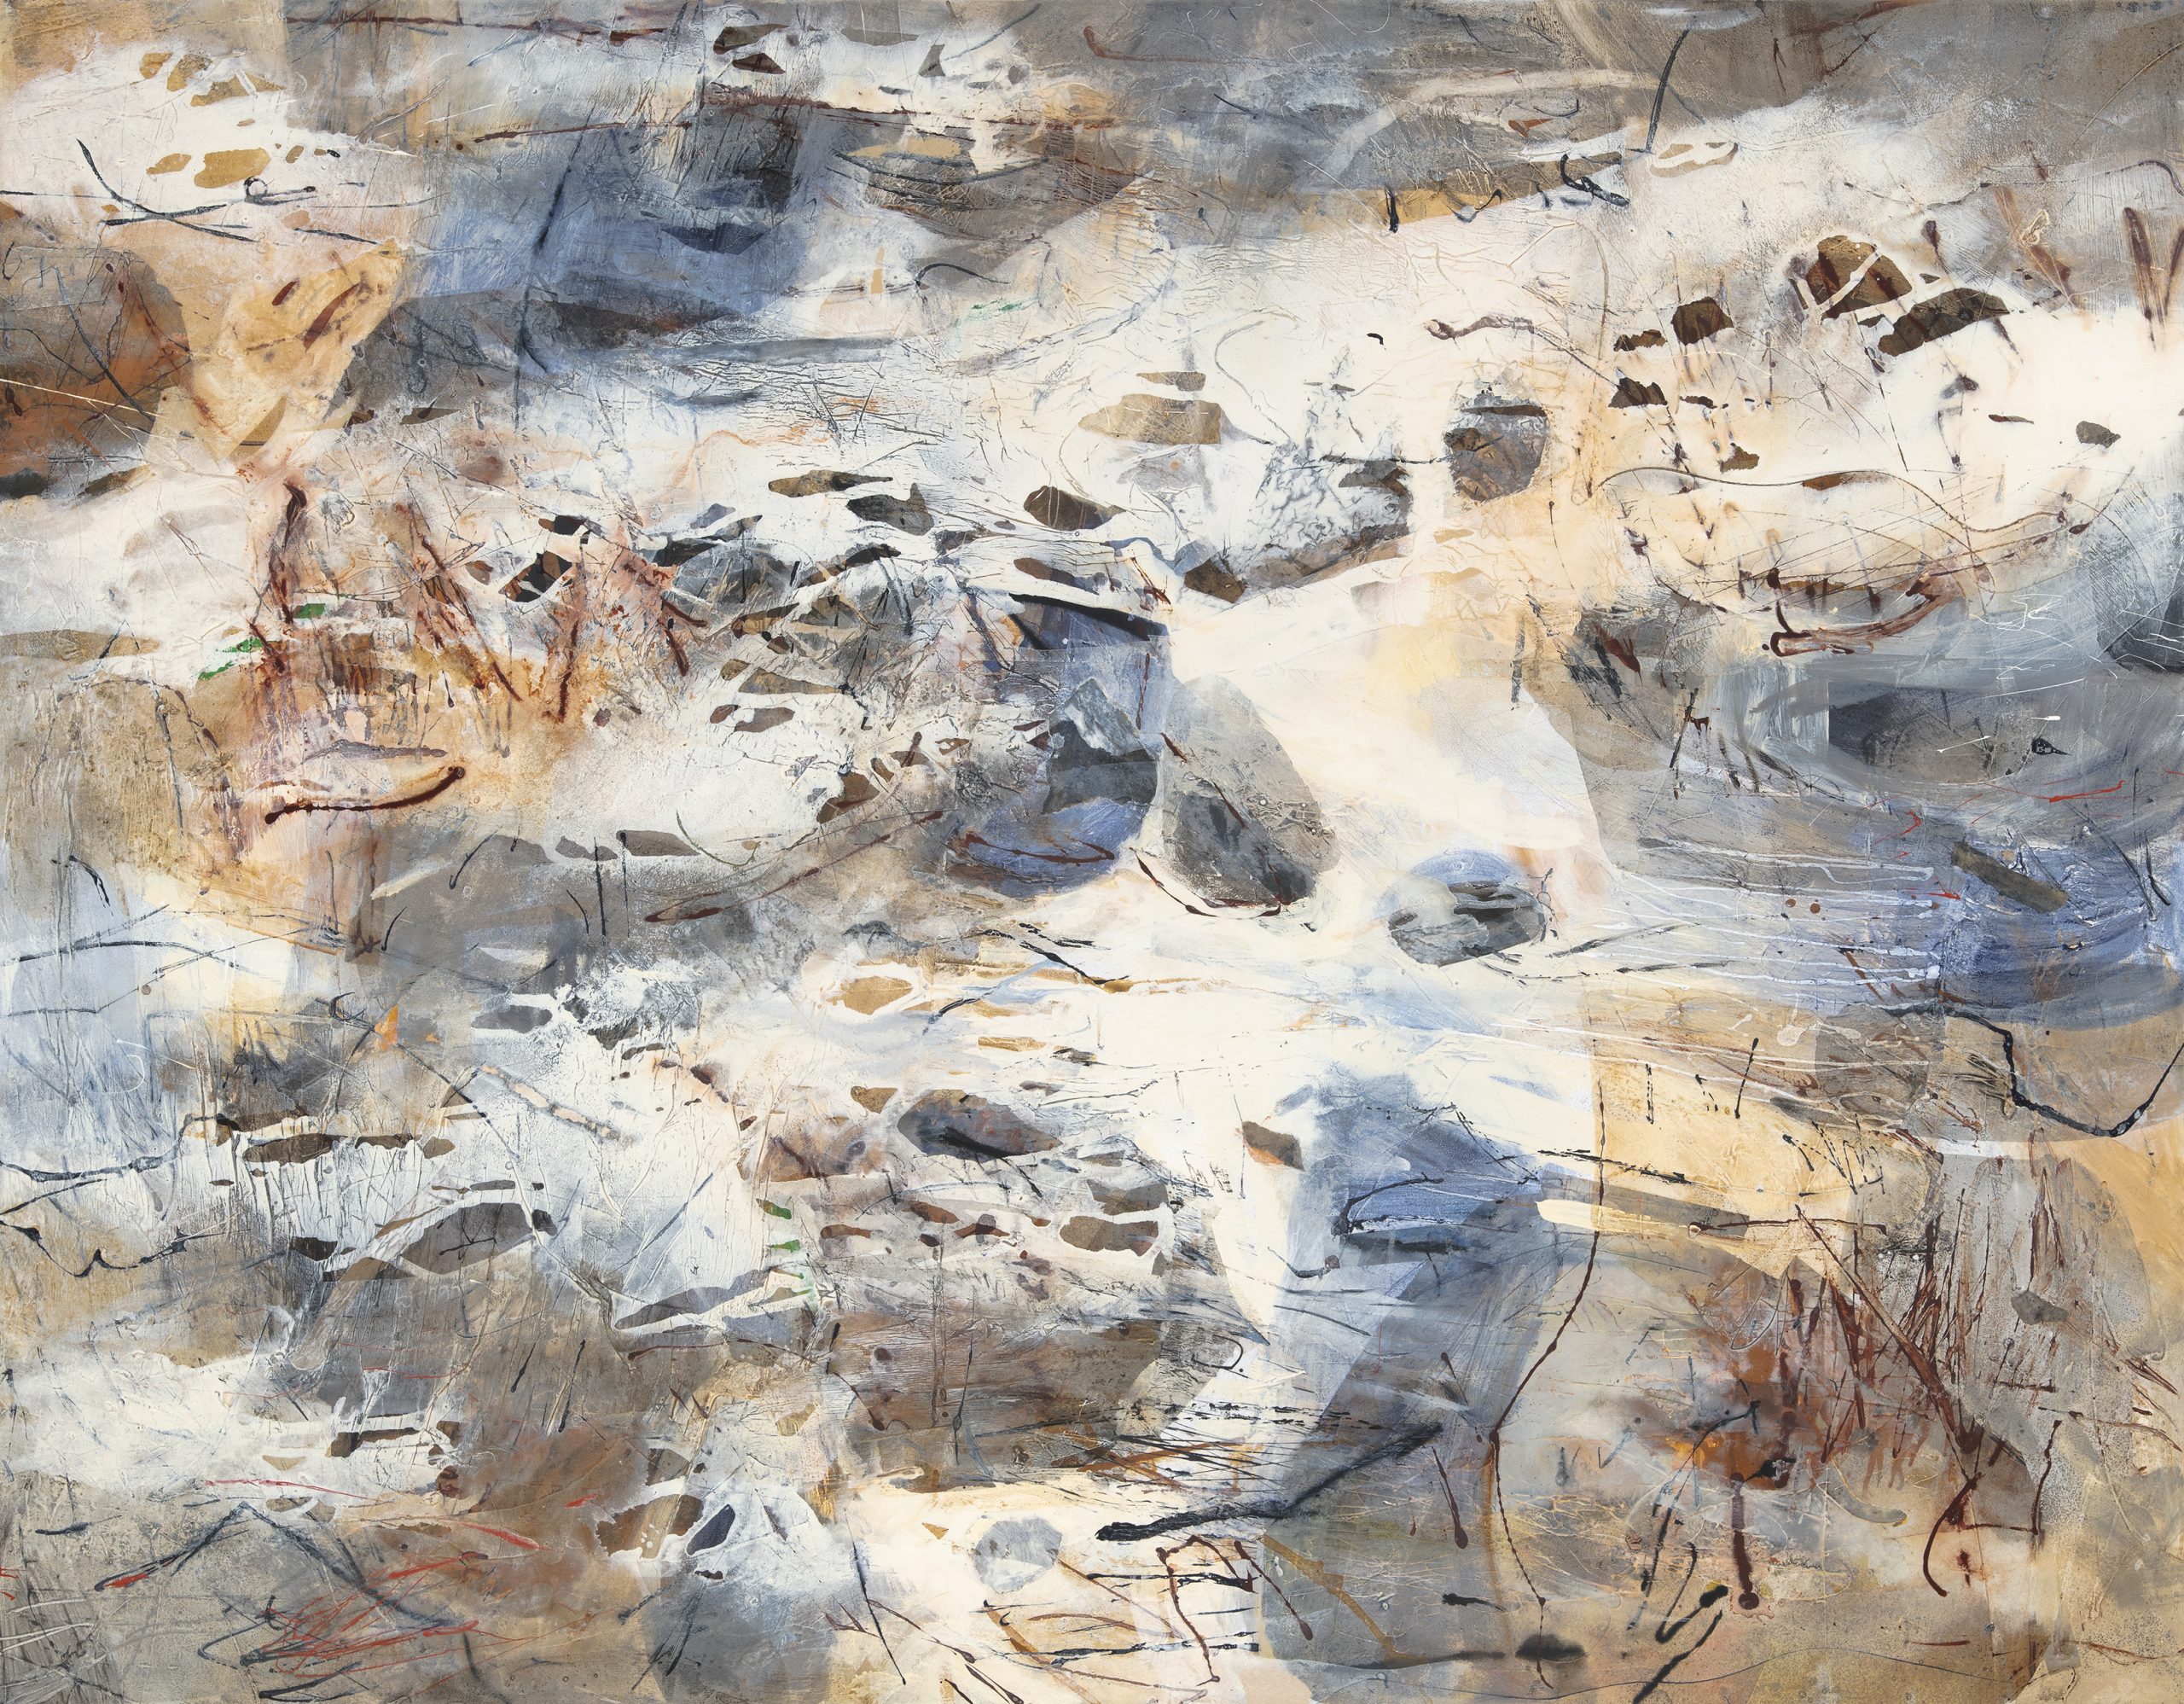 Judith White 'Coastal 2' acrylic and collage on canvas 120 x 156cm $14,000